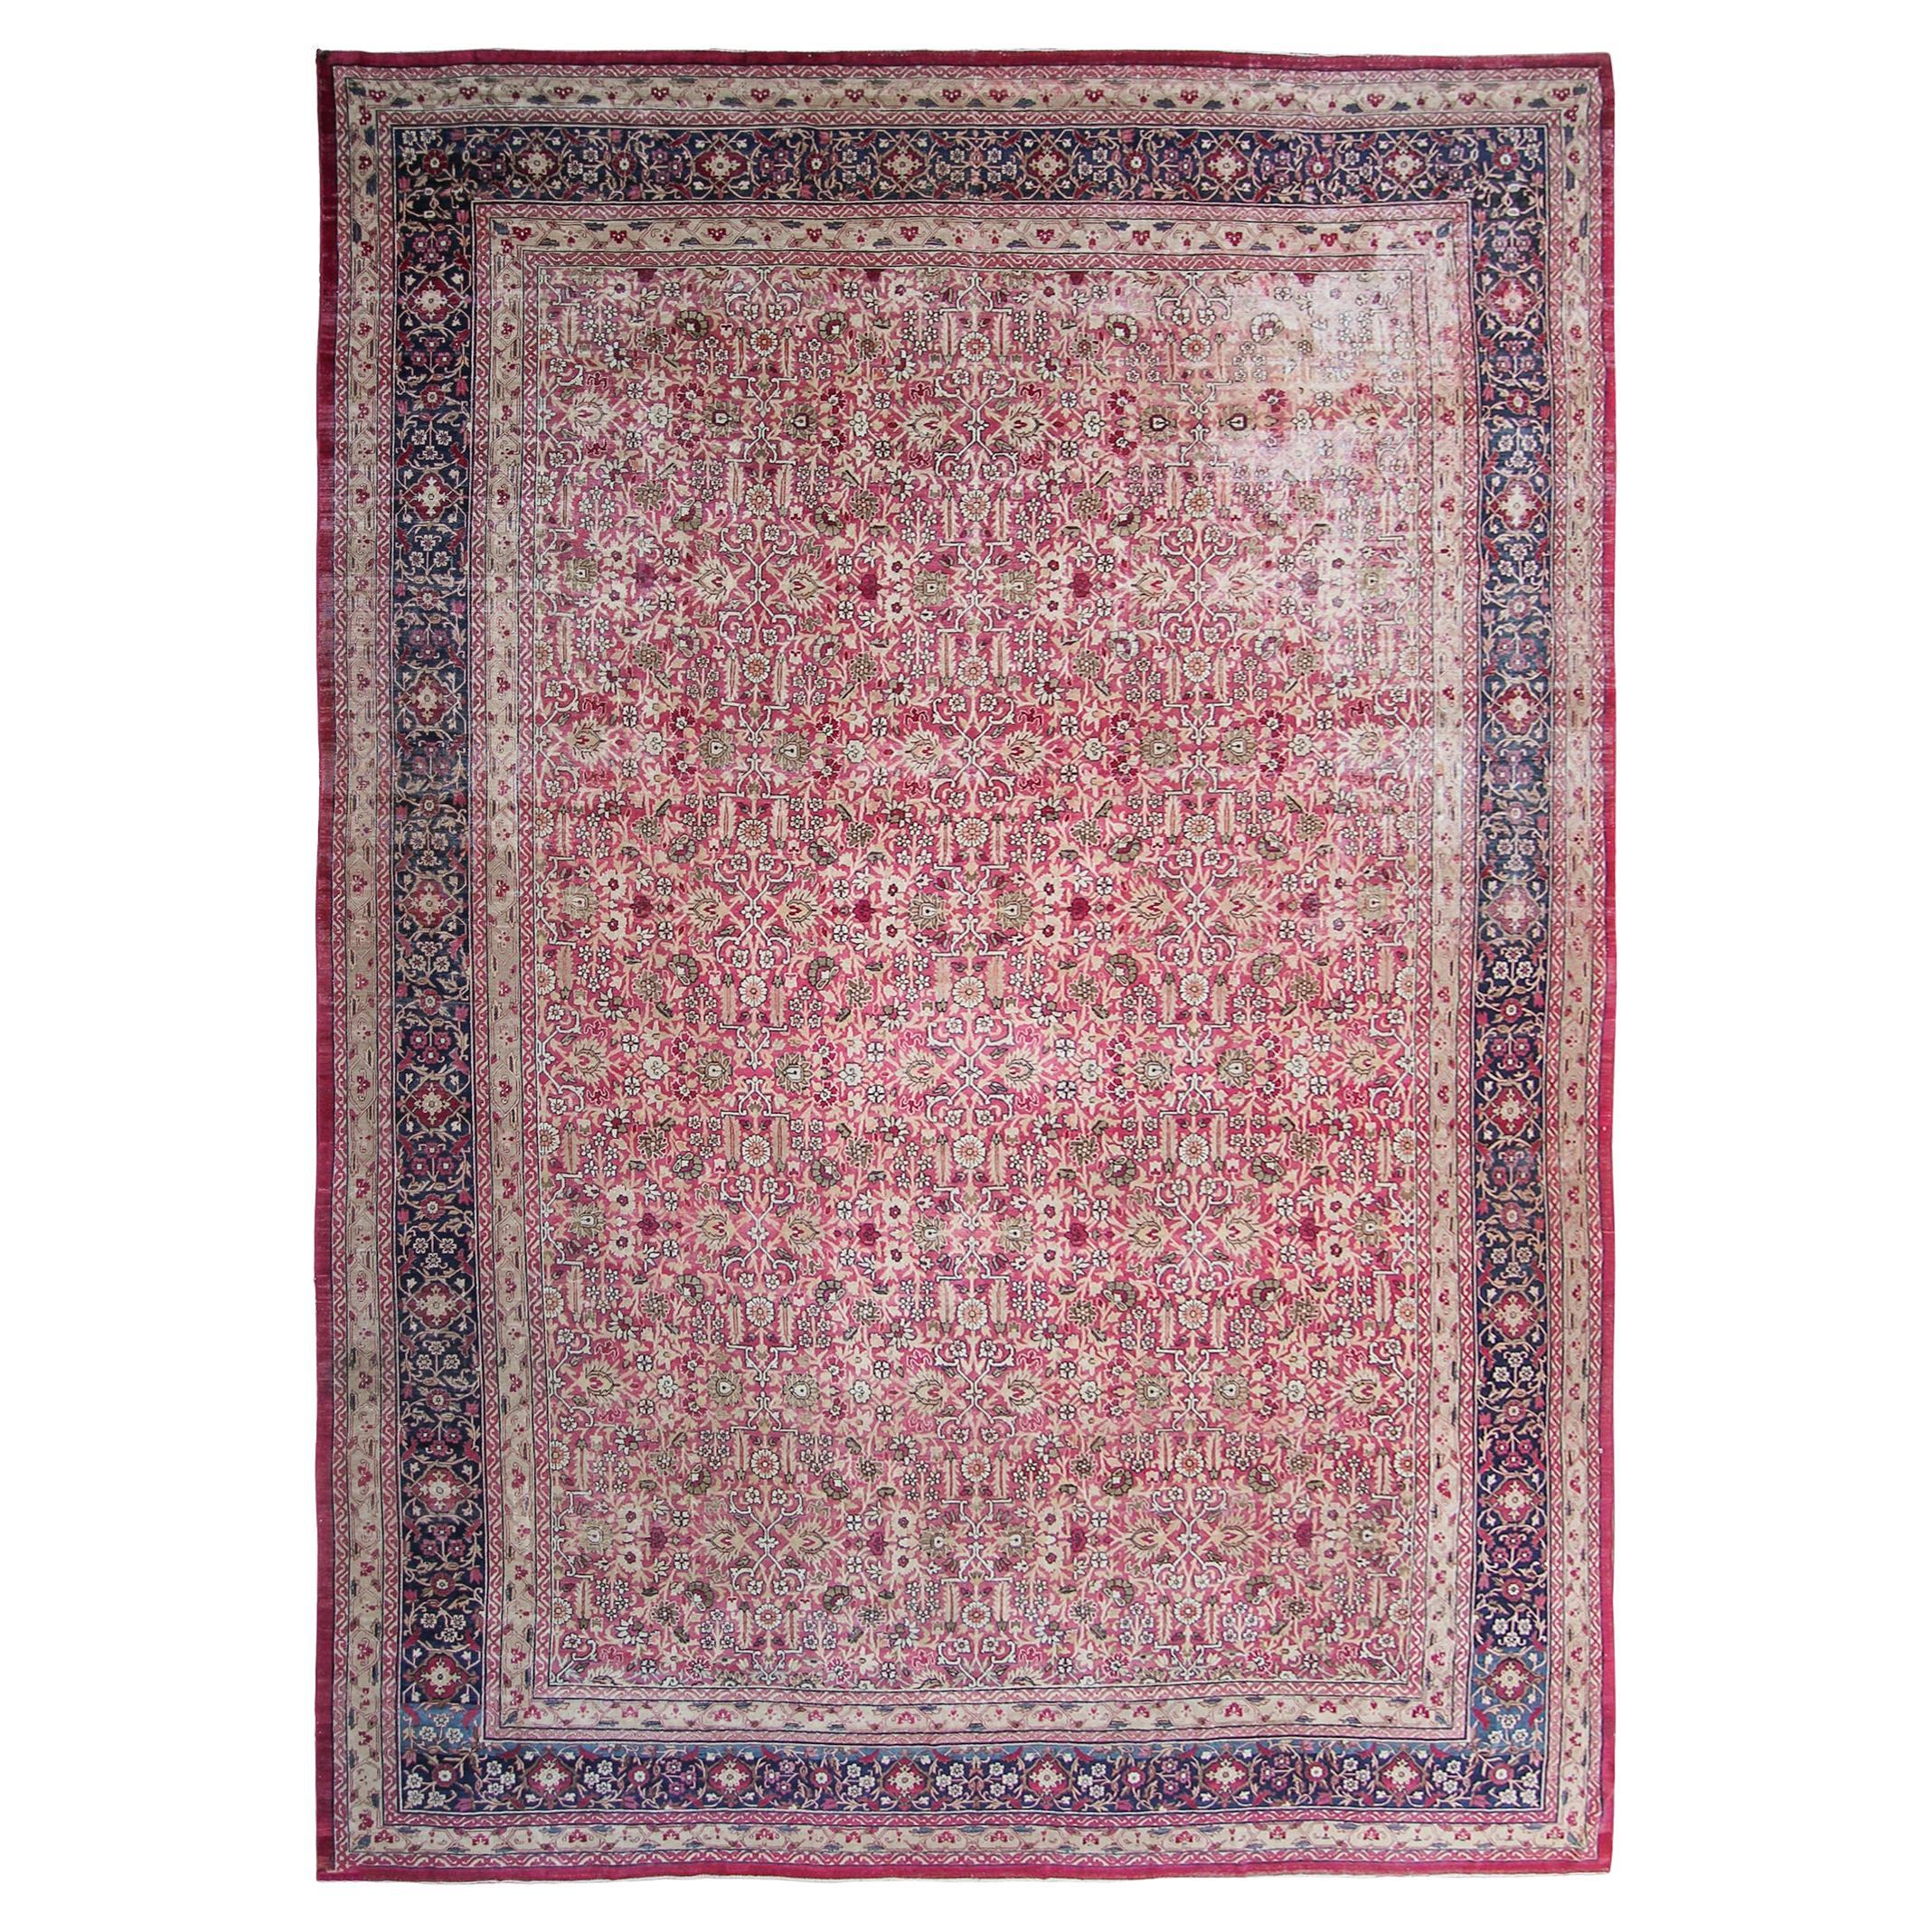 c1870 Rose Antique Lavar Kermanshah Fine Geometric Rug 11x17ft 138cm x 519cm